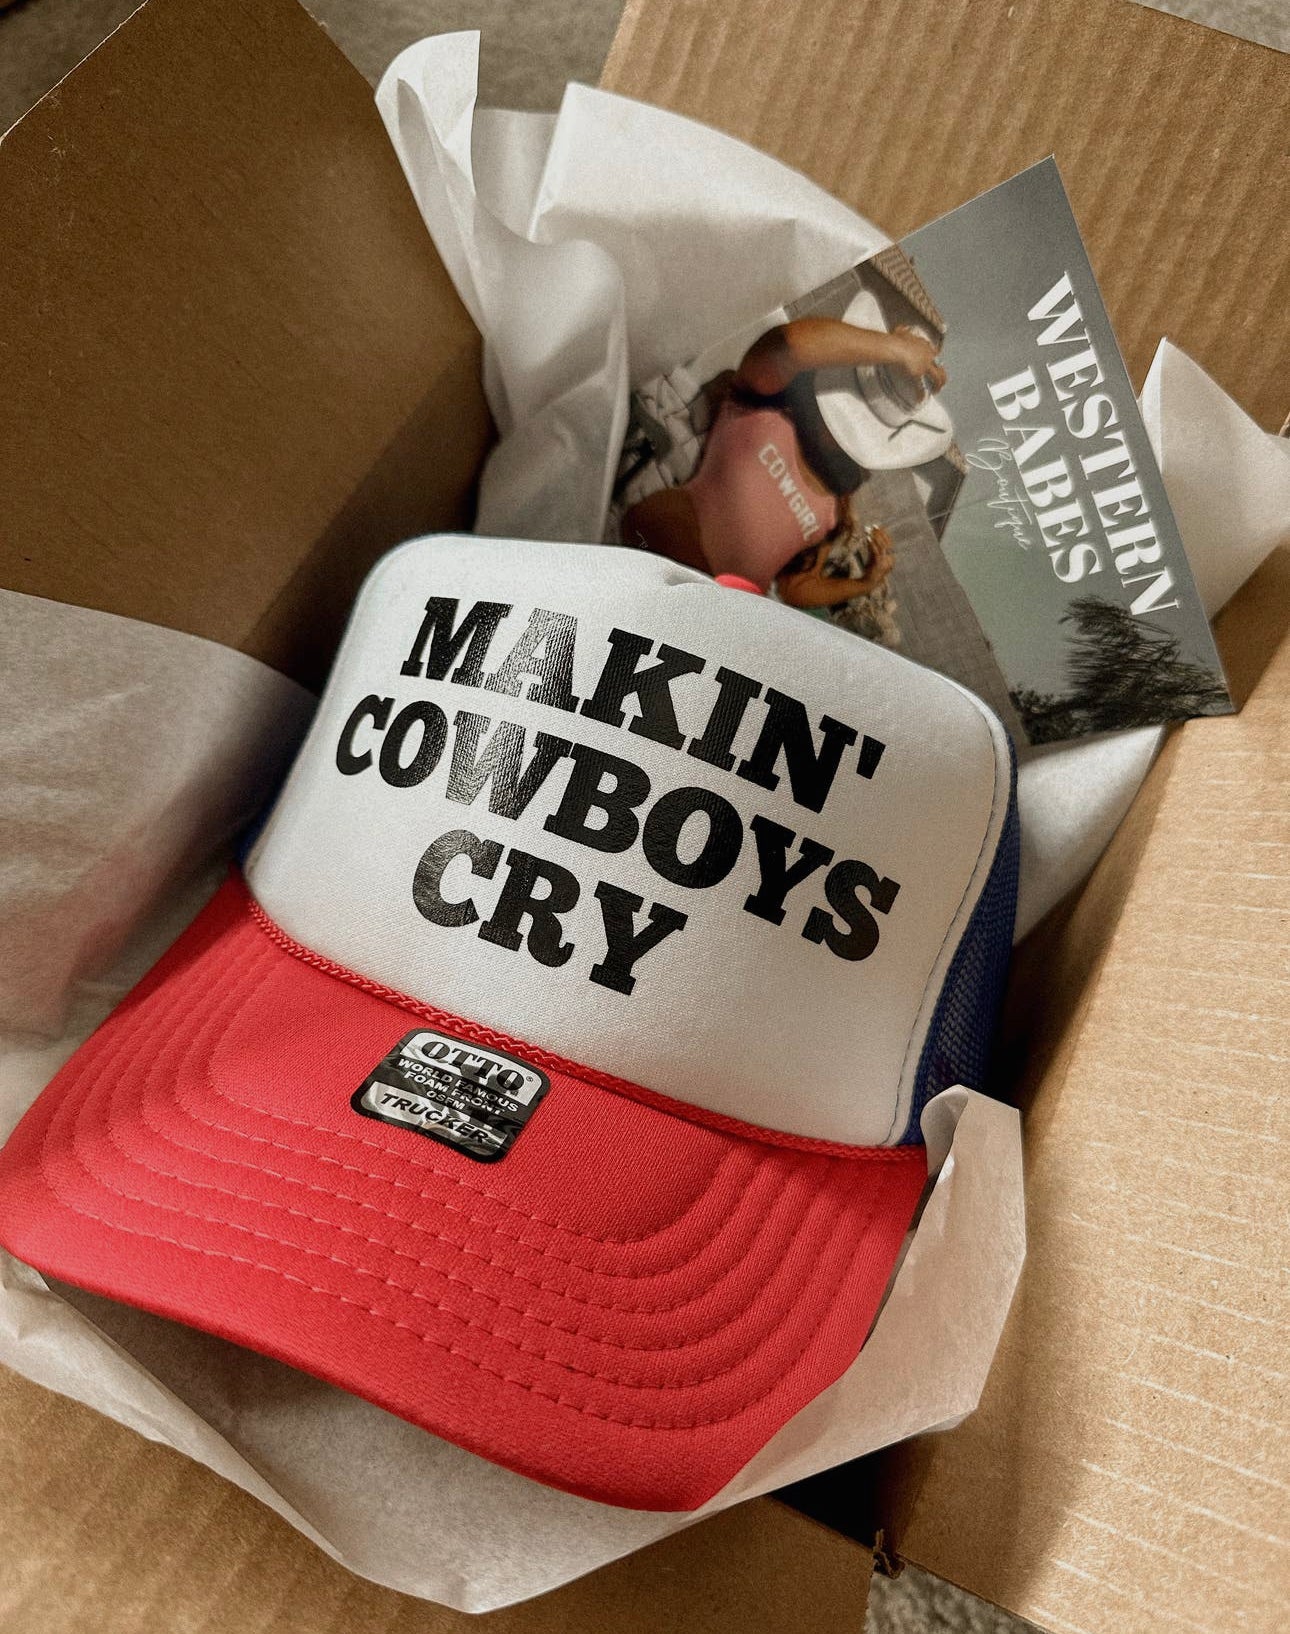 Makin cowboys cry